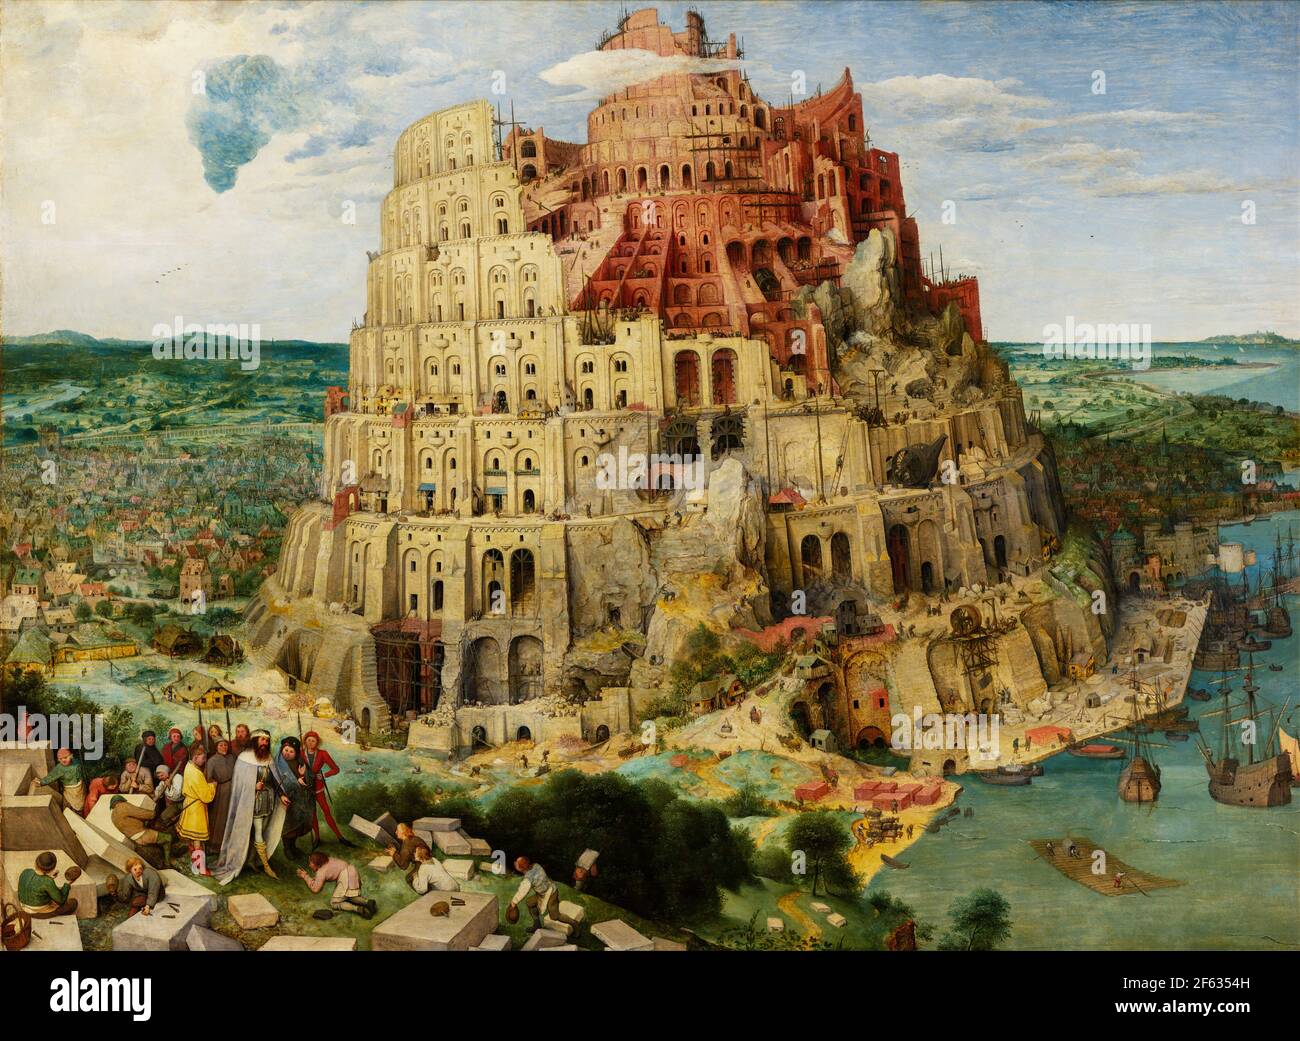 Pieter Bruegel the Elder, The Tower of Babel, 1563, oil on wood panel, Museum of Art History, Vienna, Austria. Stock Photo